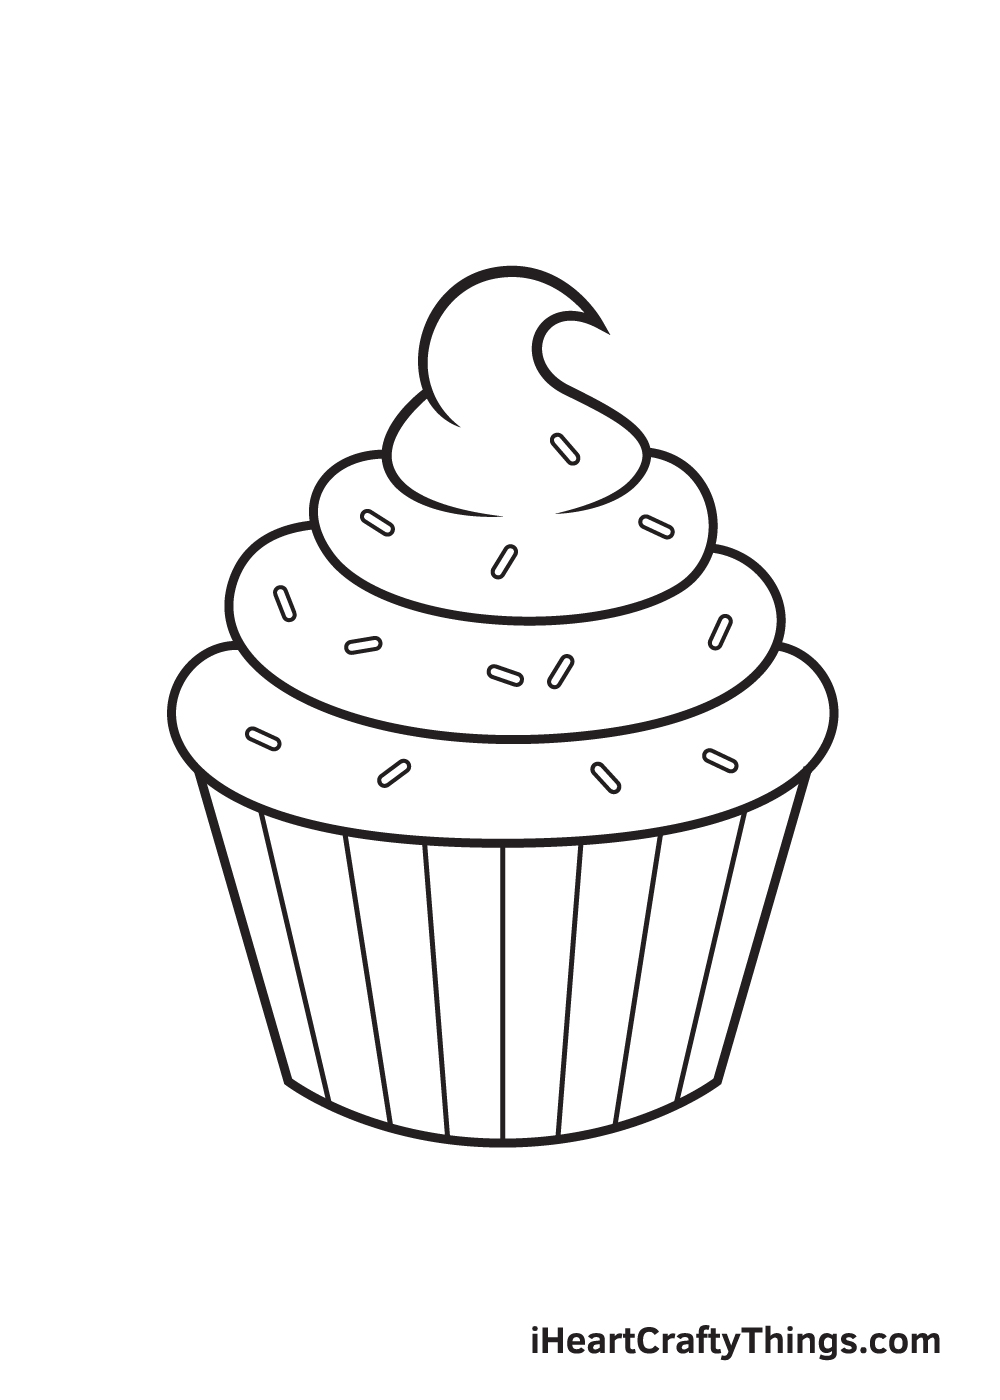 Cupcake Drawing – Step 8